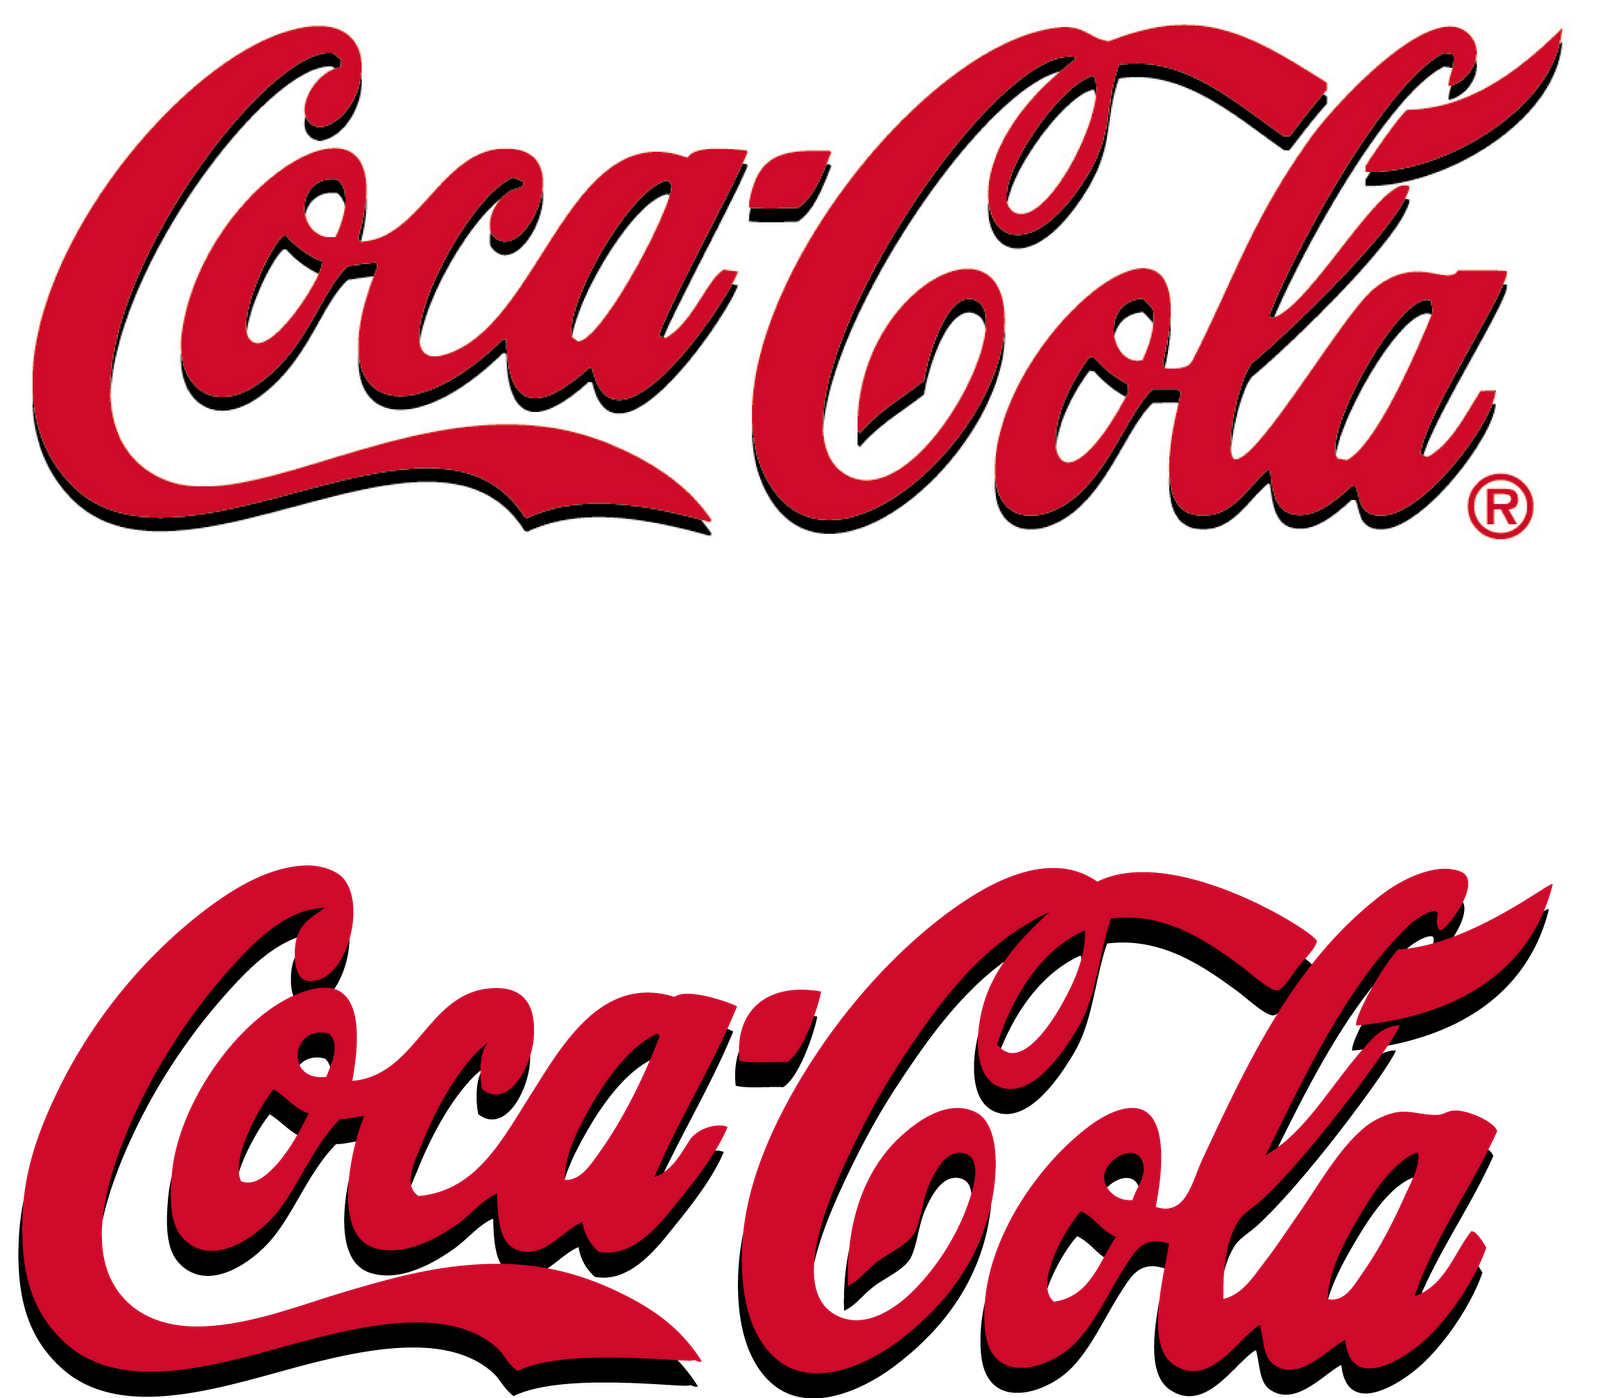 Coca Cola Logo Transparent Coca Cola Logo Png Transparent Svg Images